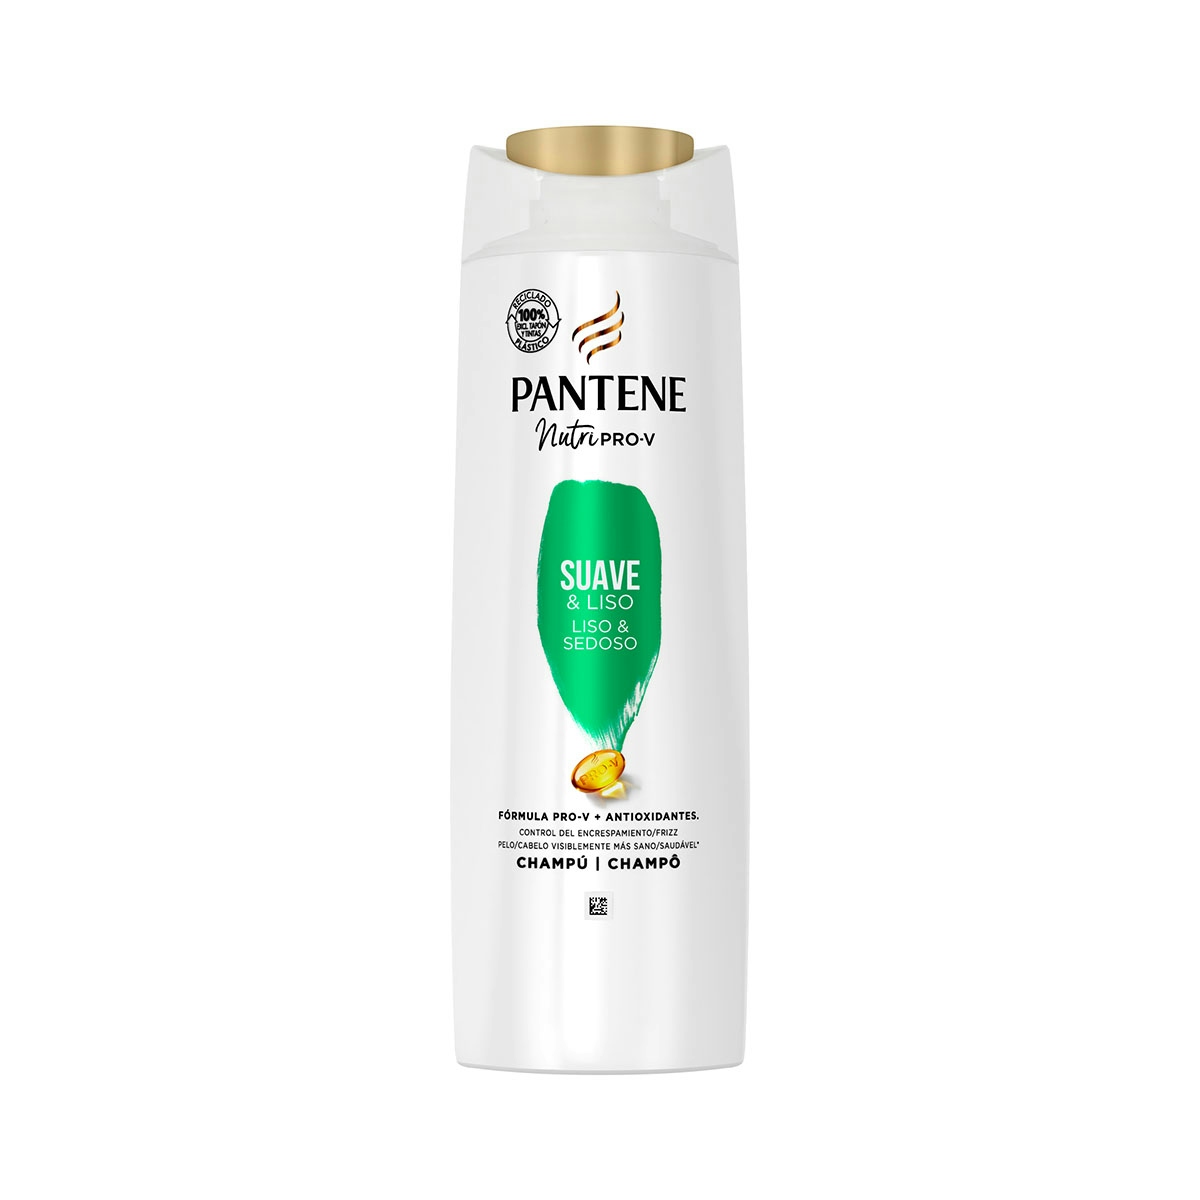 Pantene Champú Suave & Liso Nutri Pro-V, fórmula Pro-V + antioxidantes, para cabello encrespado y rebelde, 340ML